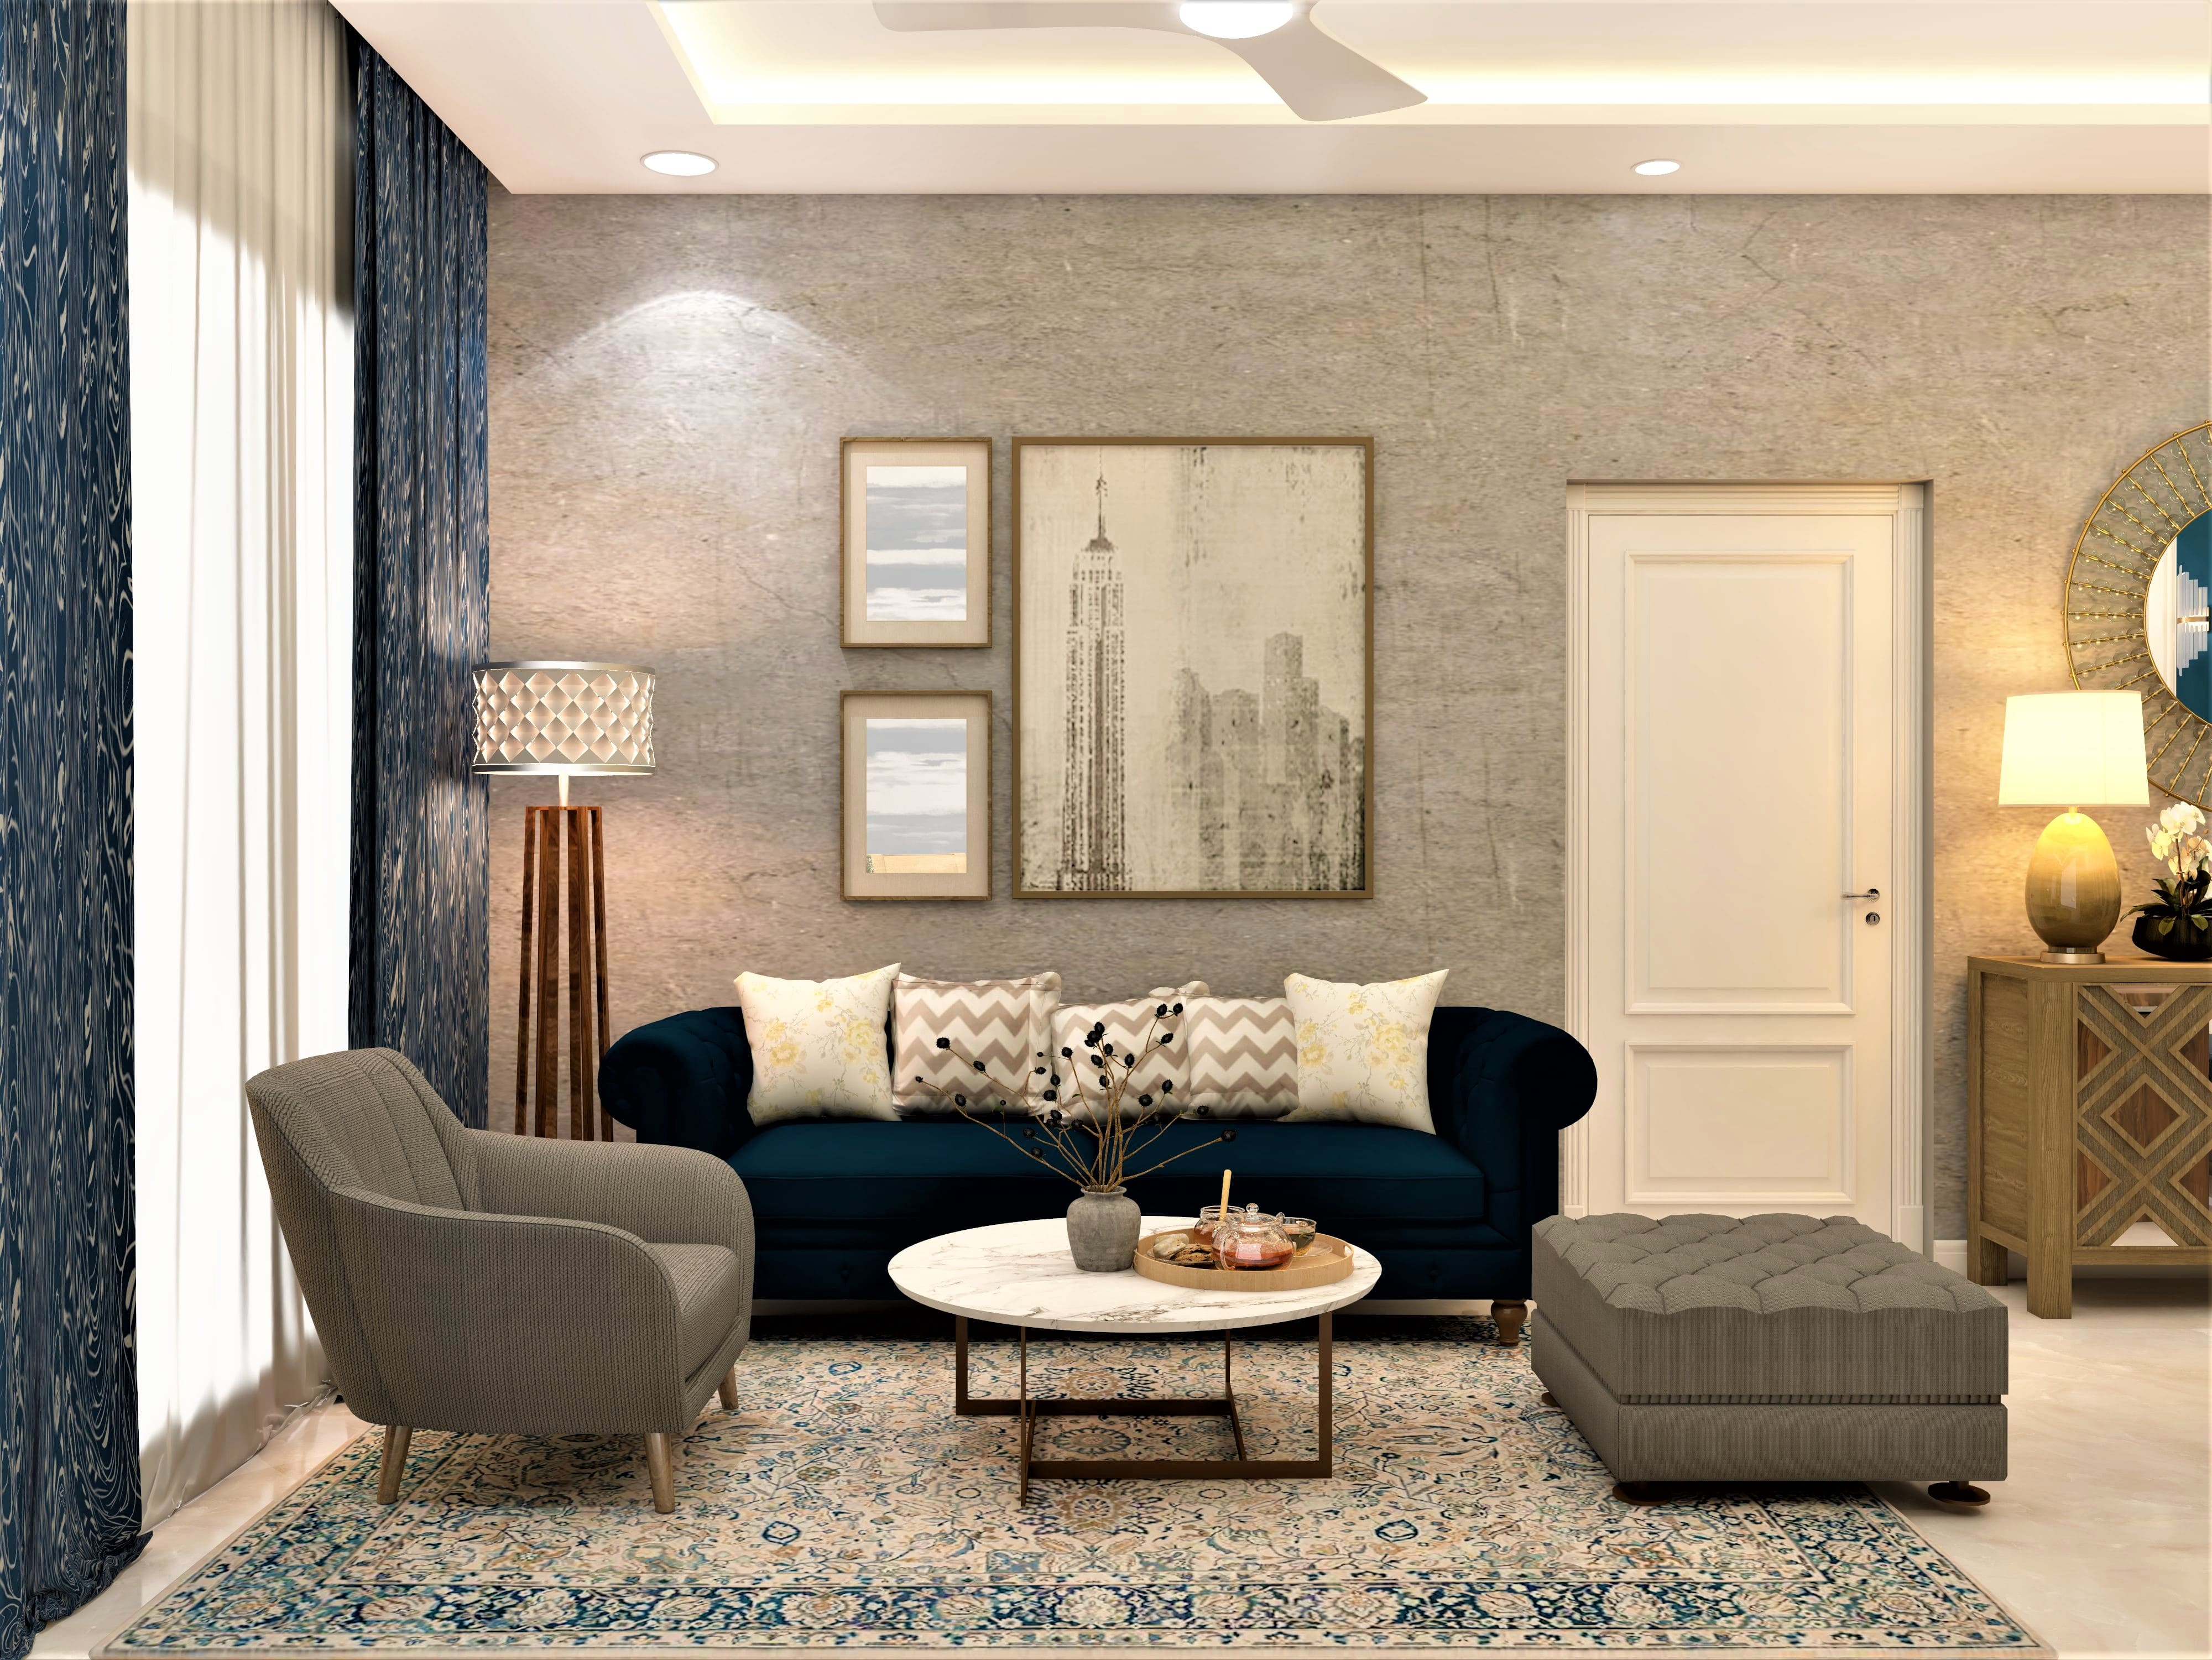 Blue & Grey contemporary living room design ideas for your home - Beautiful Homes